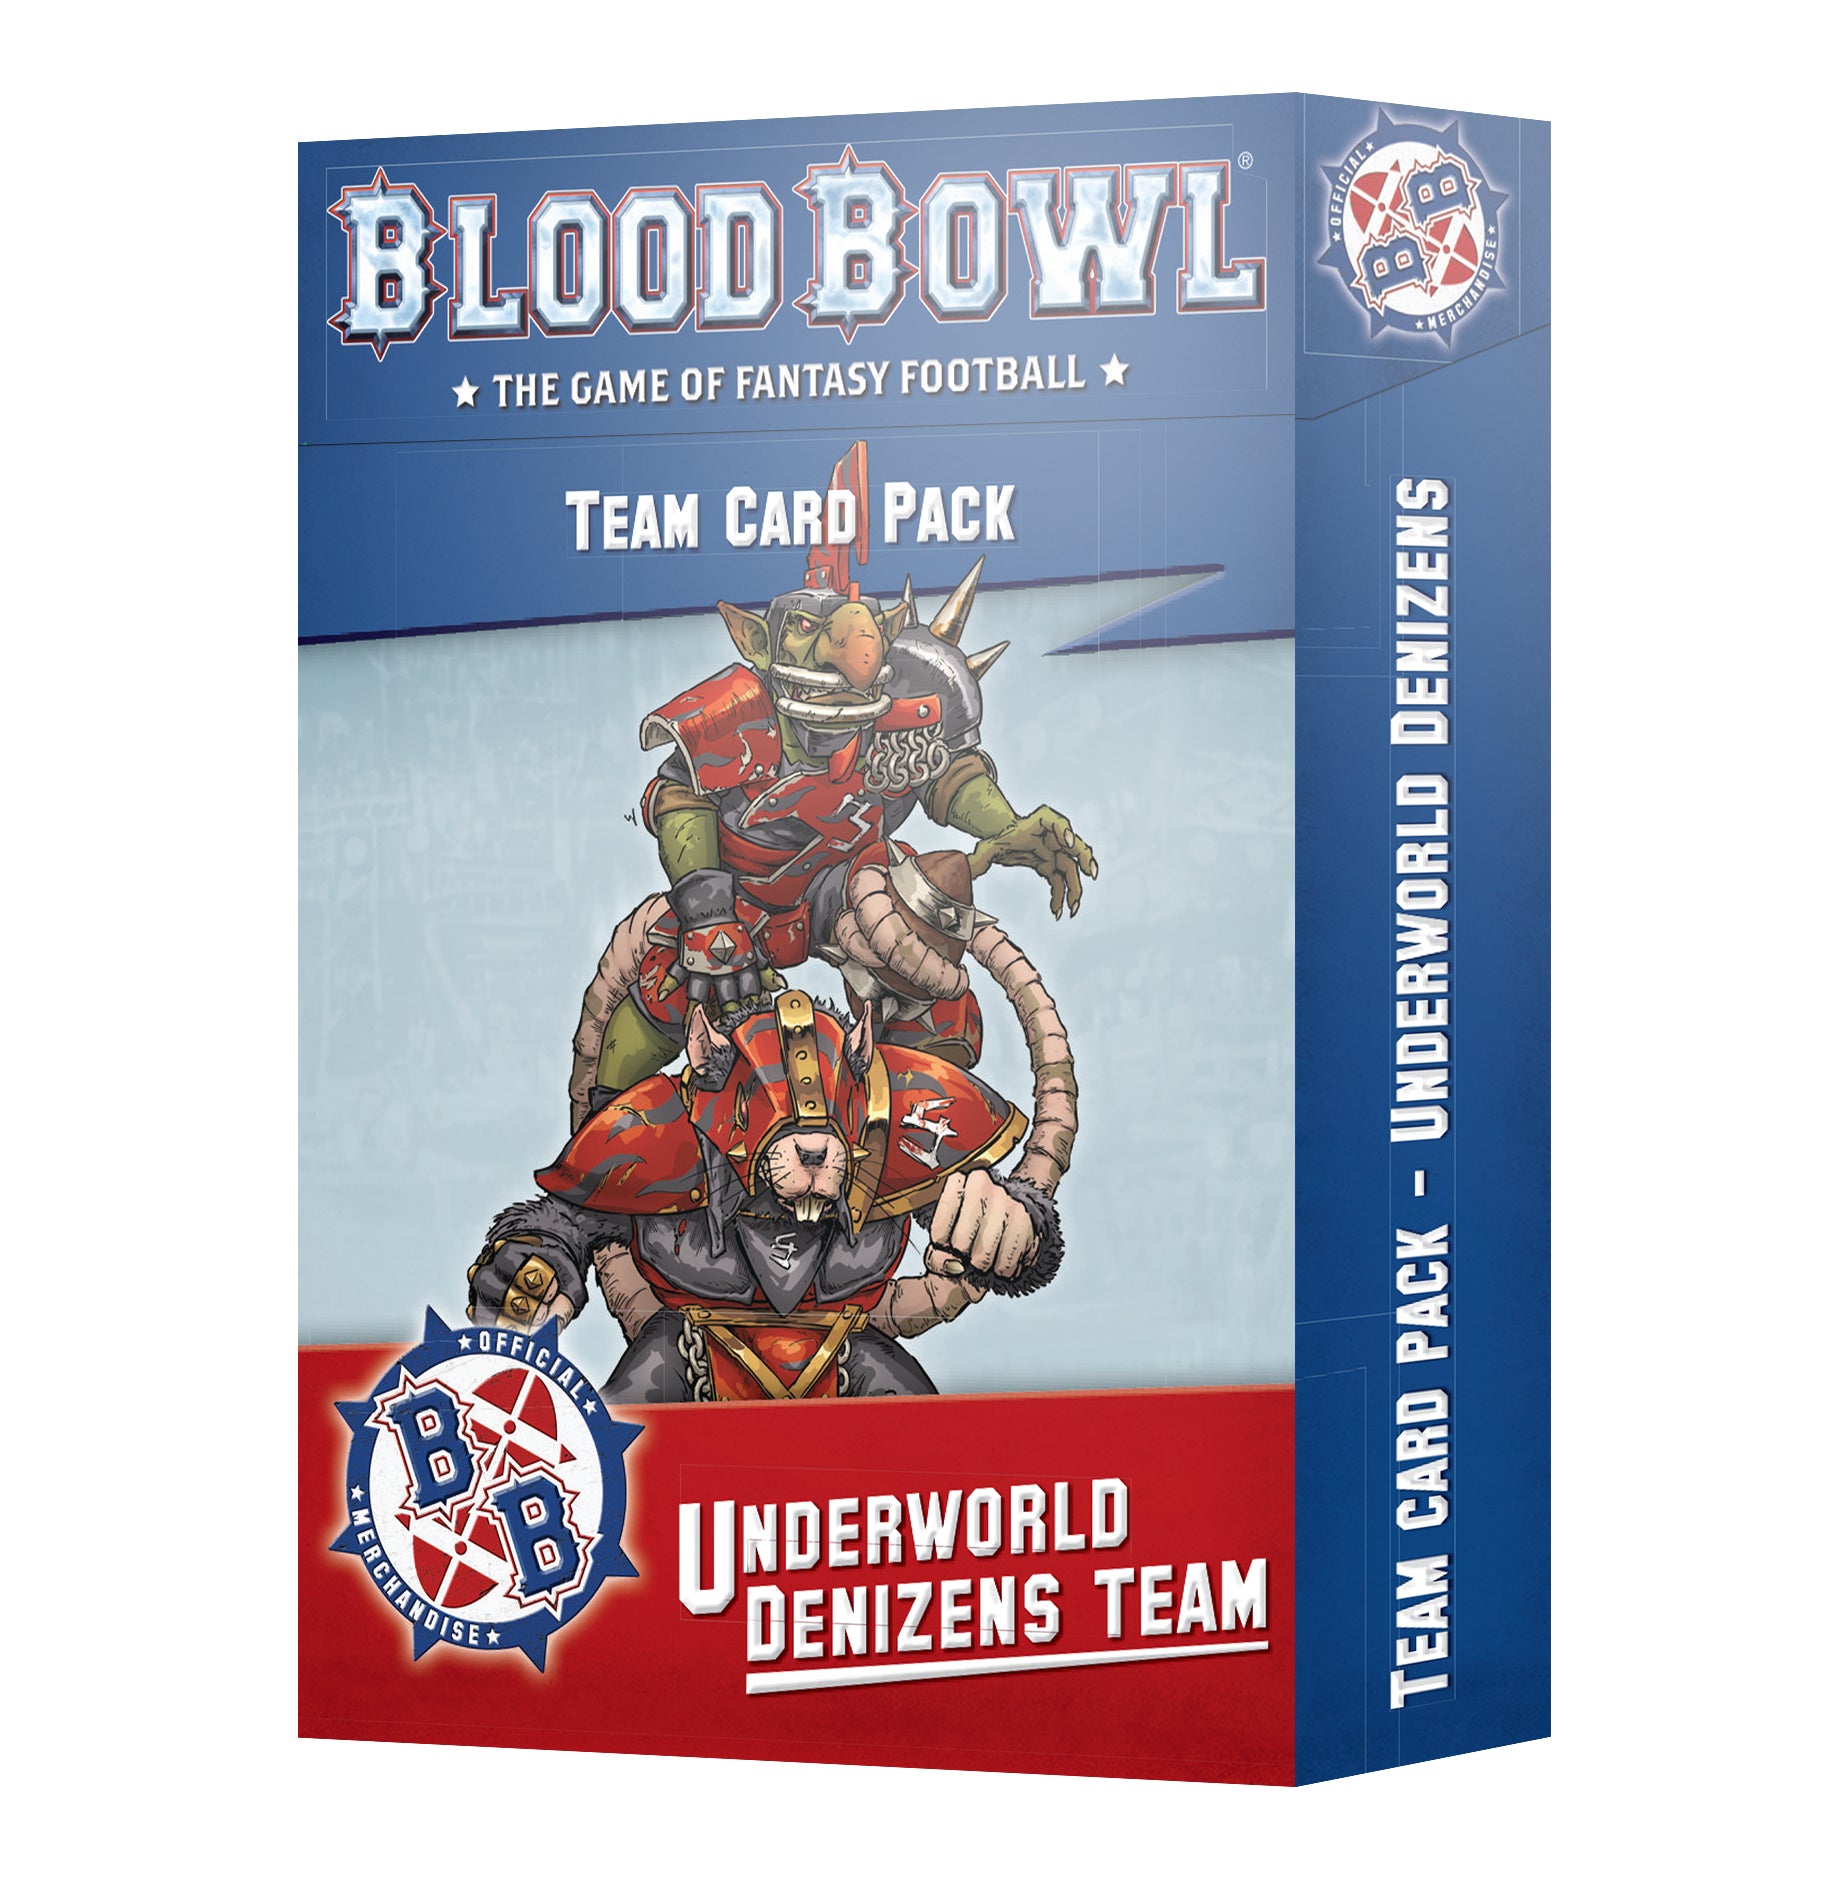 a box of blood bowl team card packs